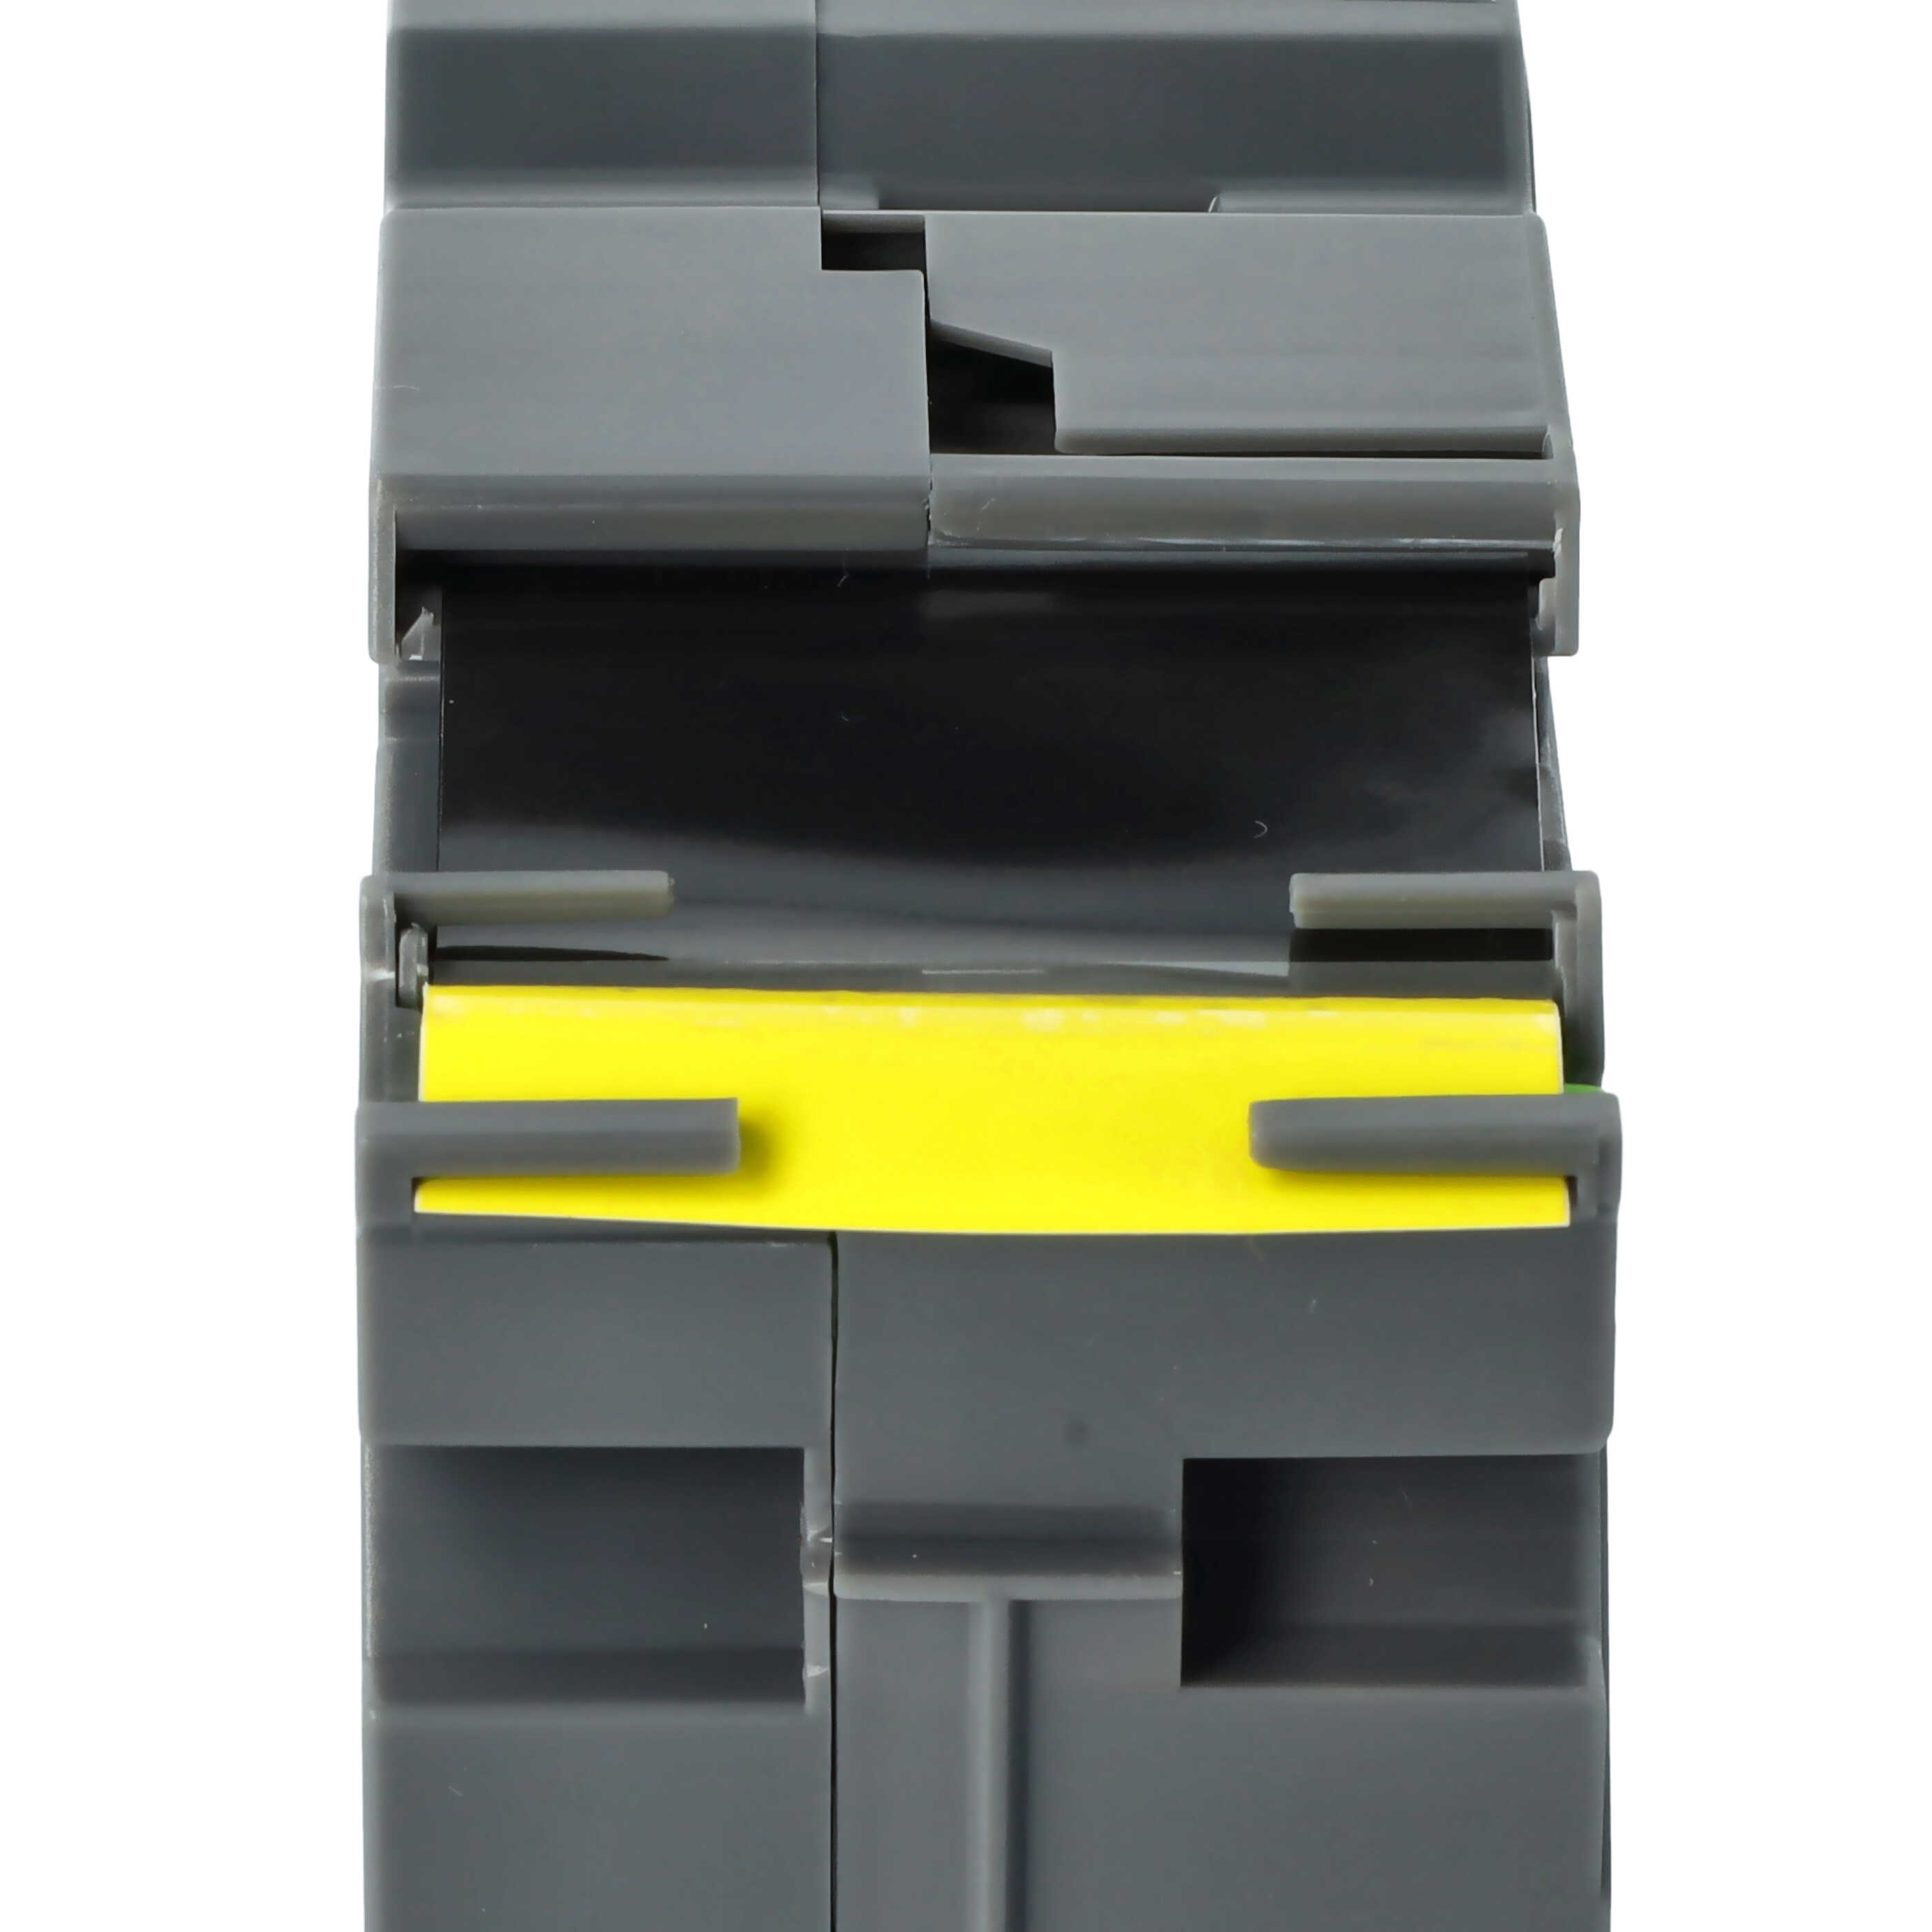 Casete cinta escritura reemplaza Brother TZE-FX661, TZ-FX661 Negro su Amarillo